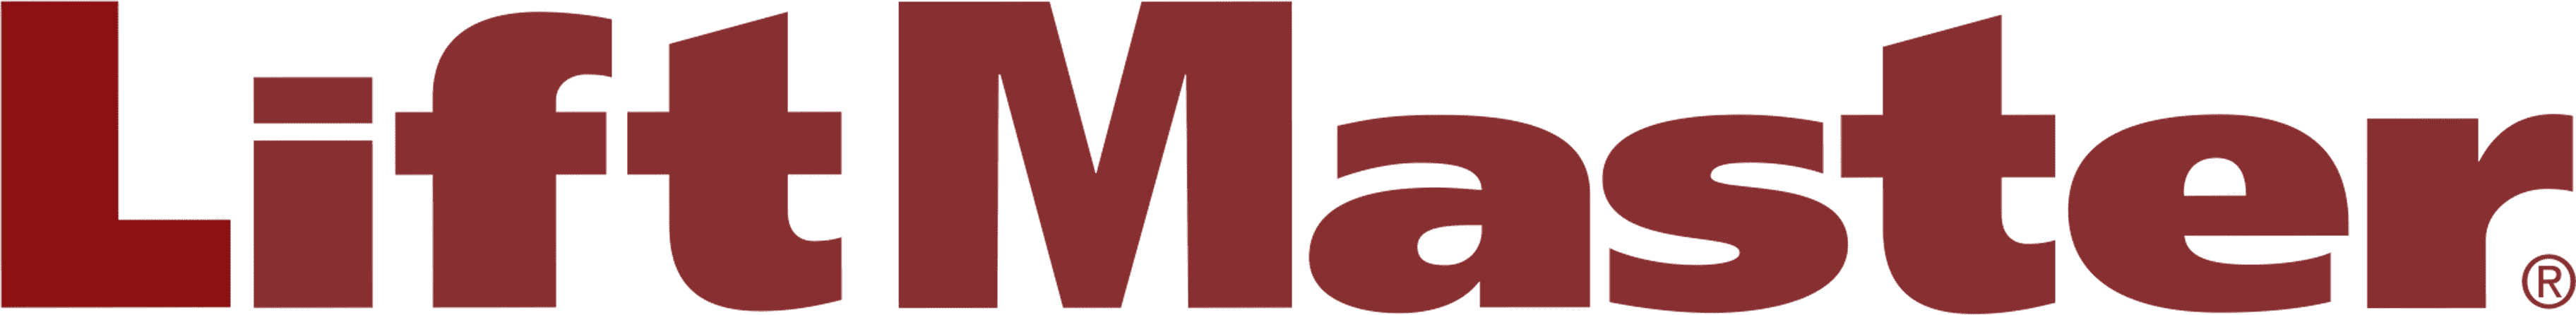 Logo for LiftMaster